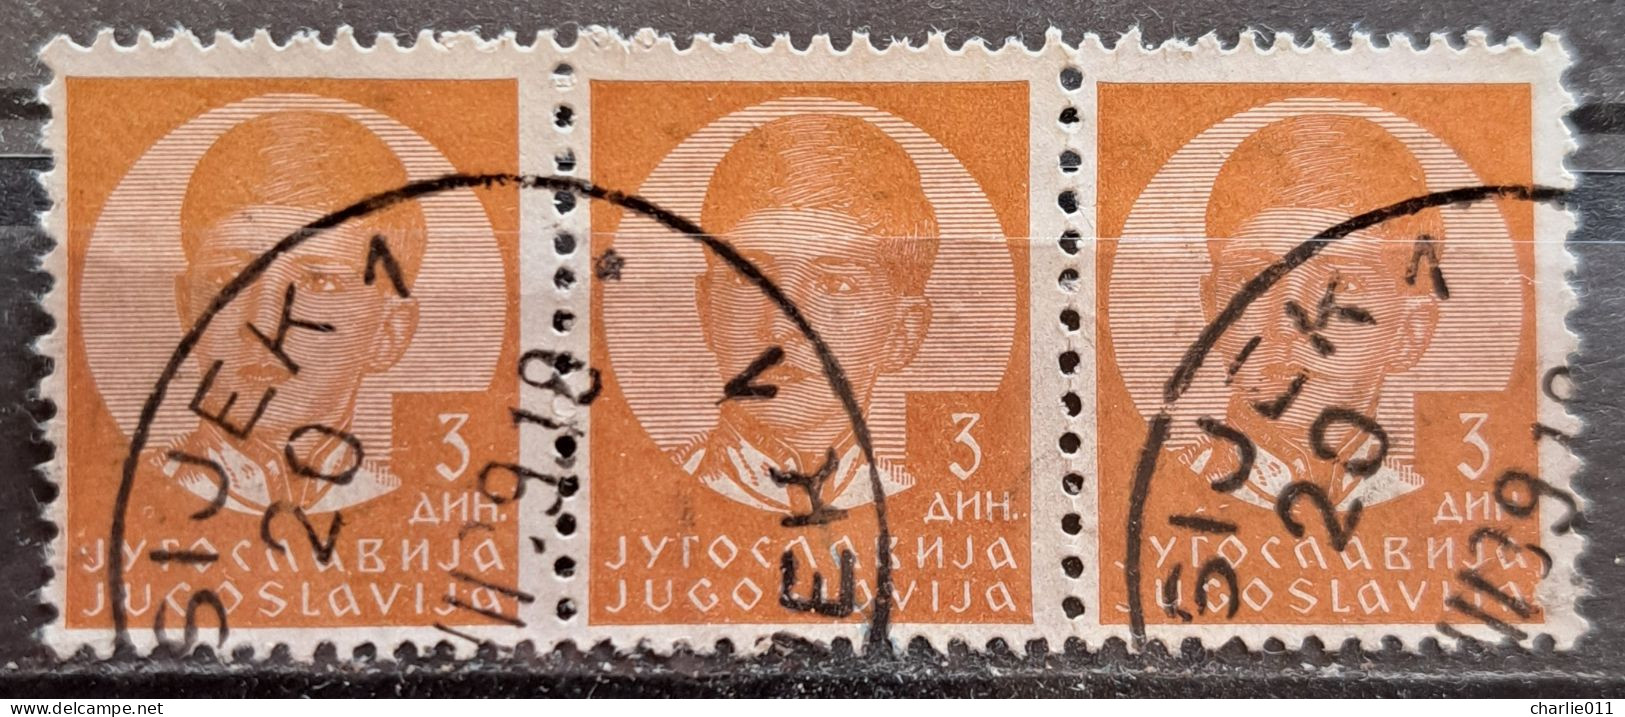 KING PETER II-3 DIN.-3 IN RAW-POSTMARK OSIJEK-ERROR-CROATIA-YUGOSLAVIA-1939 - Oblitérés